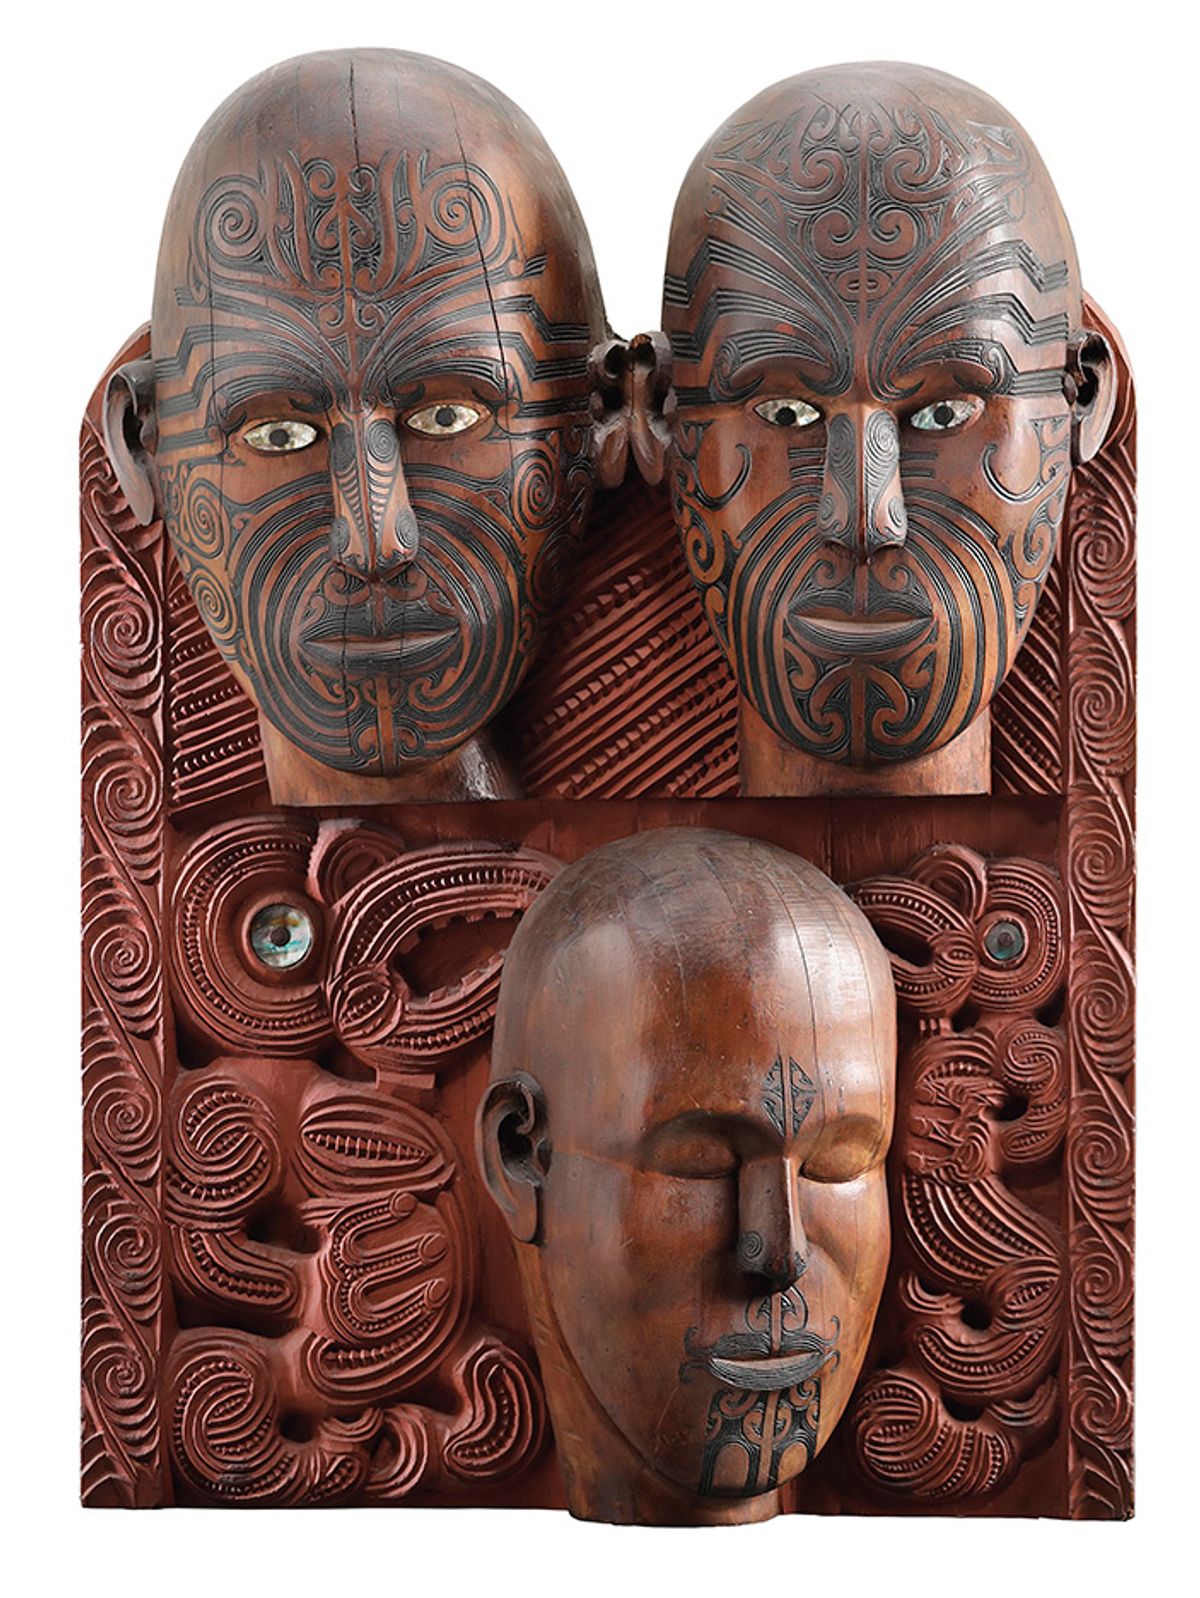 Courtesy of National Museum of New Zealand Te Papa Tongarewa